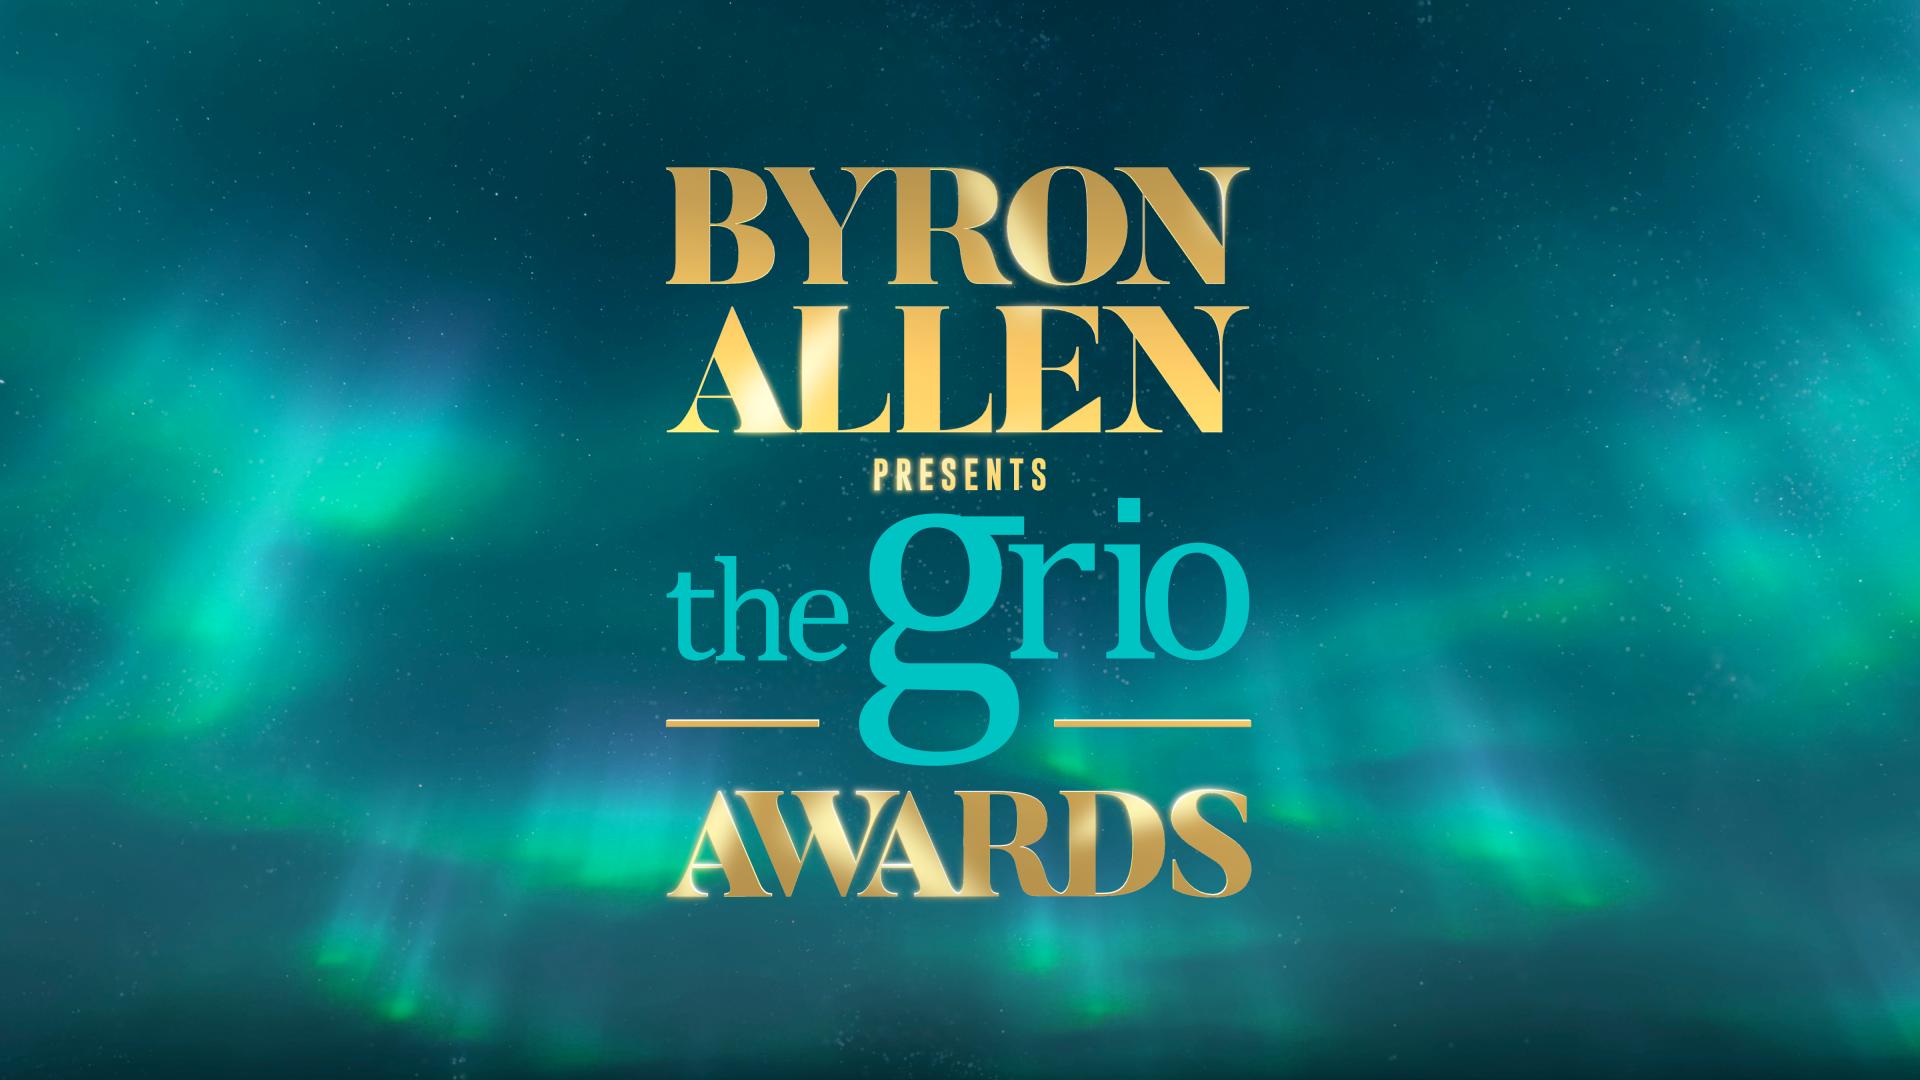 Byron Allen Presents TheGrio Awards Free Live Stream CBS Online How